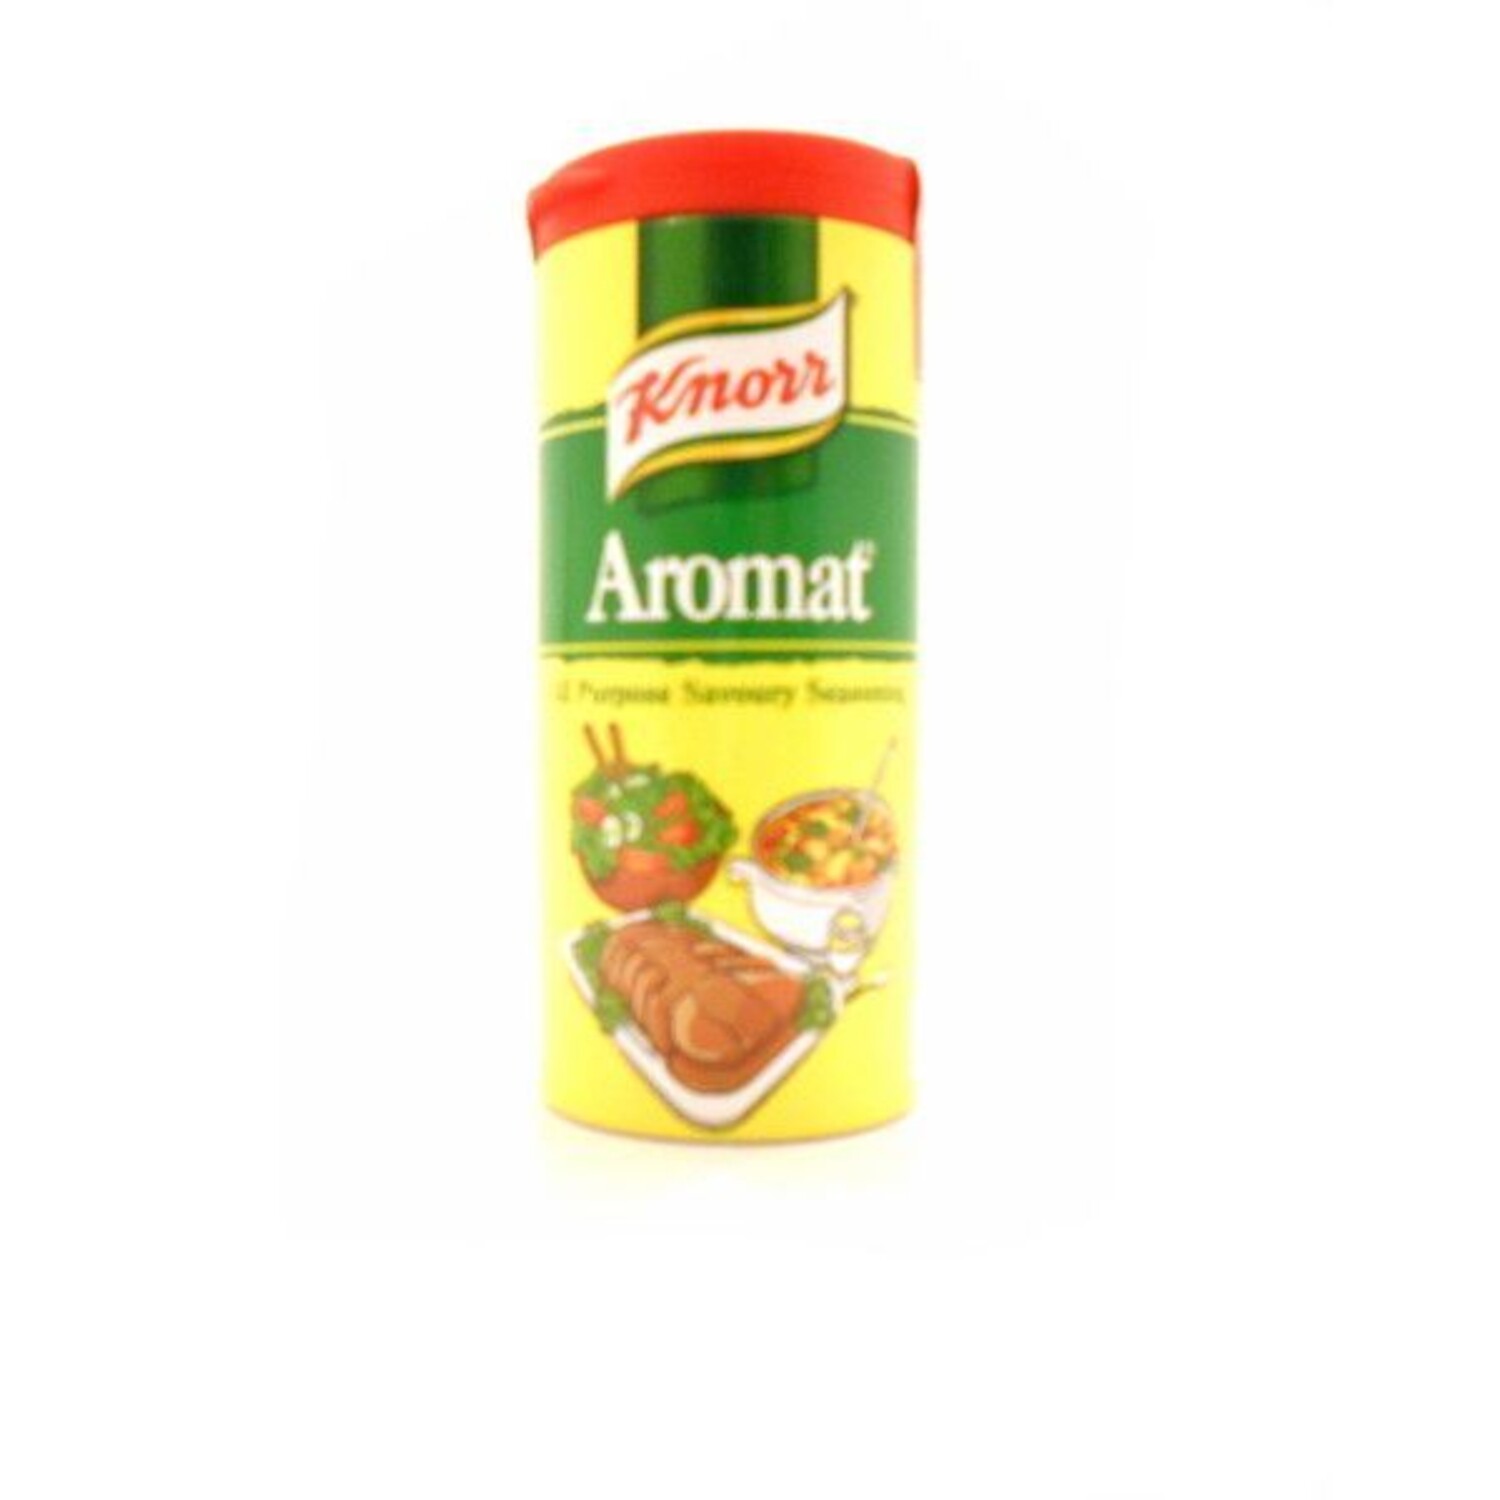 Knorr Aromat All Purpose 3.1 oz shaker - Peters Gourmet Market